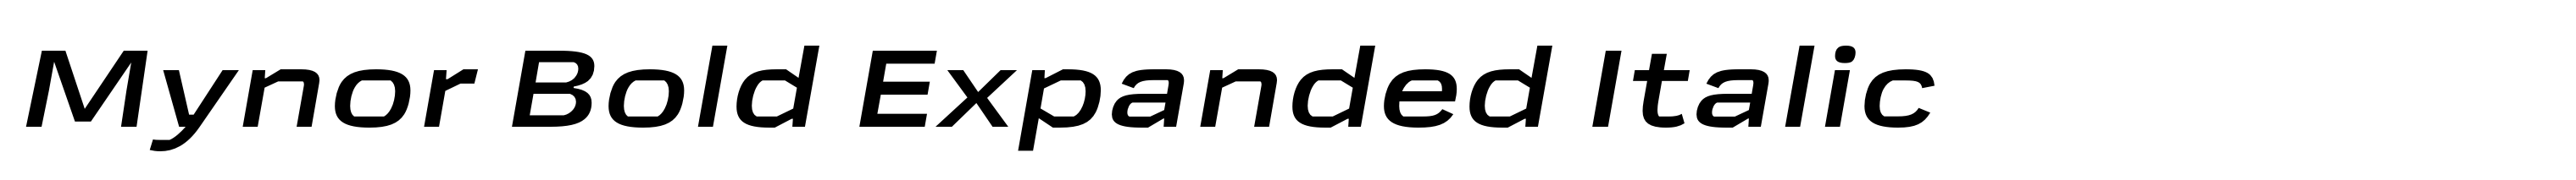 Mynor Bold Expanded Italic